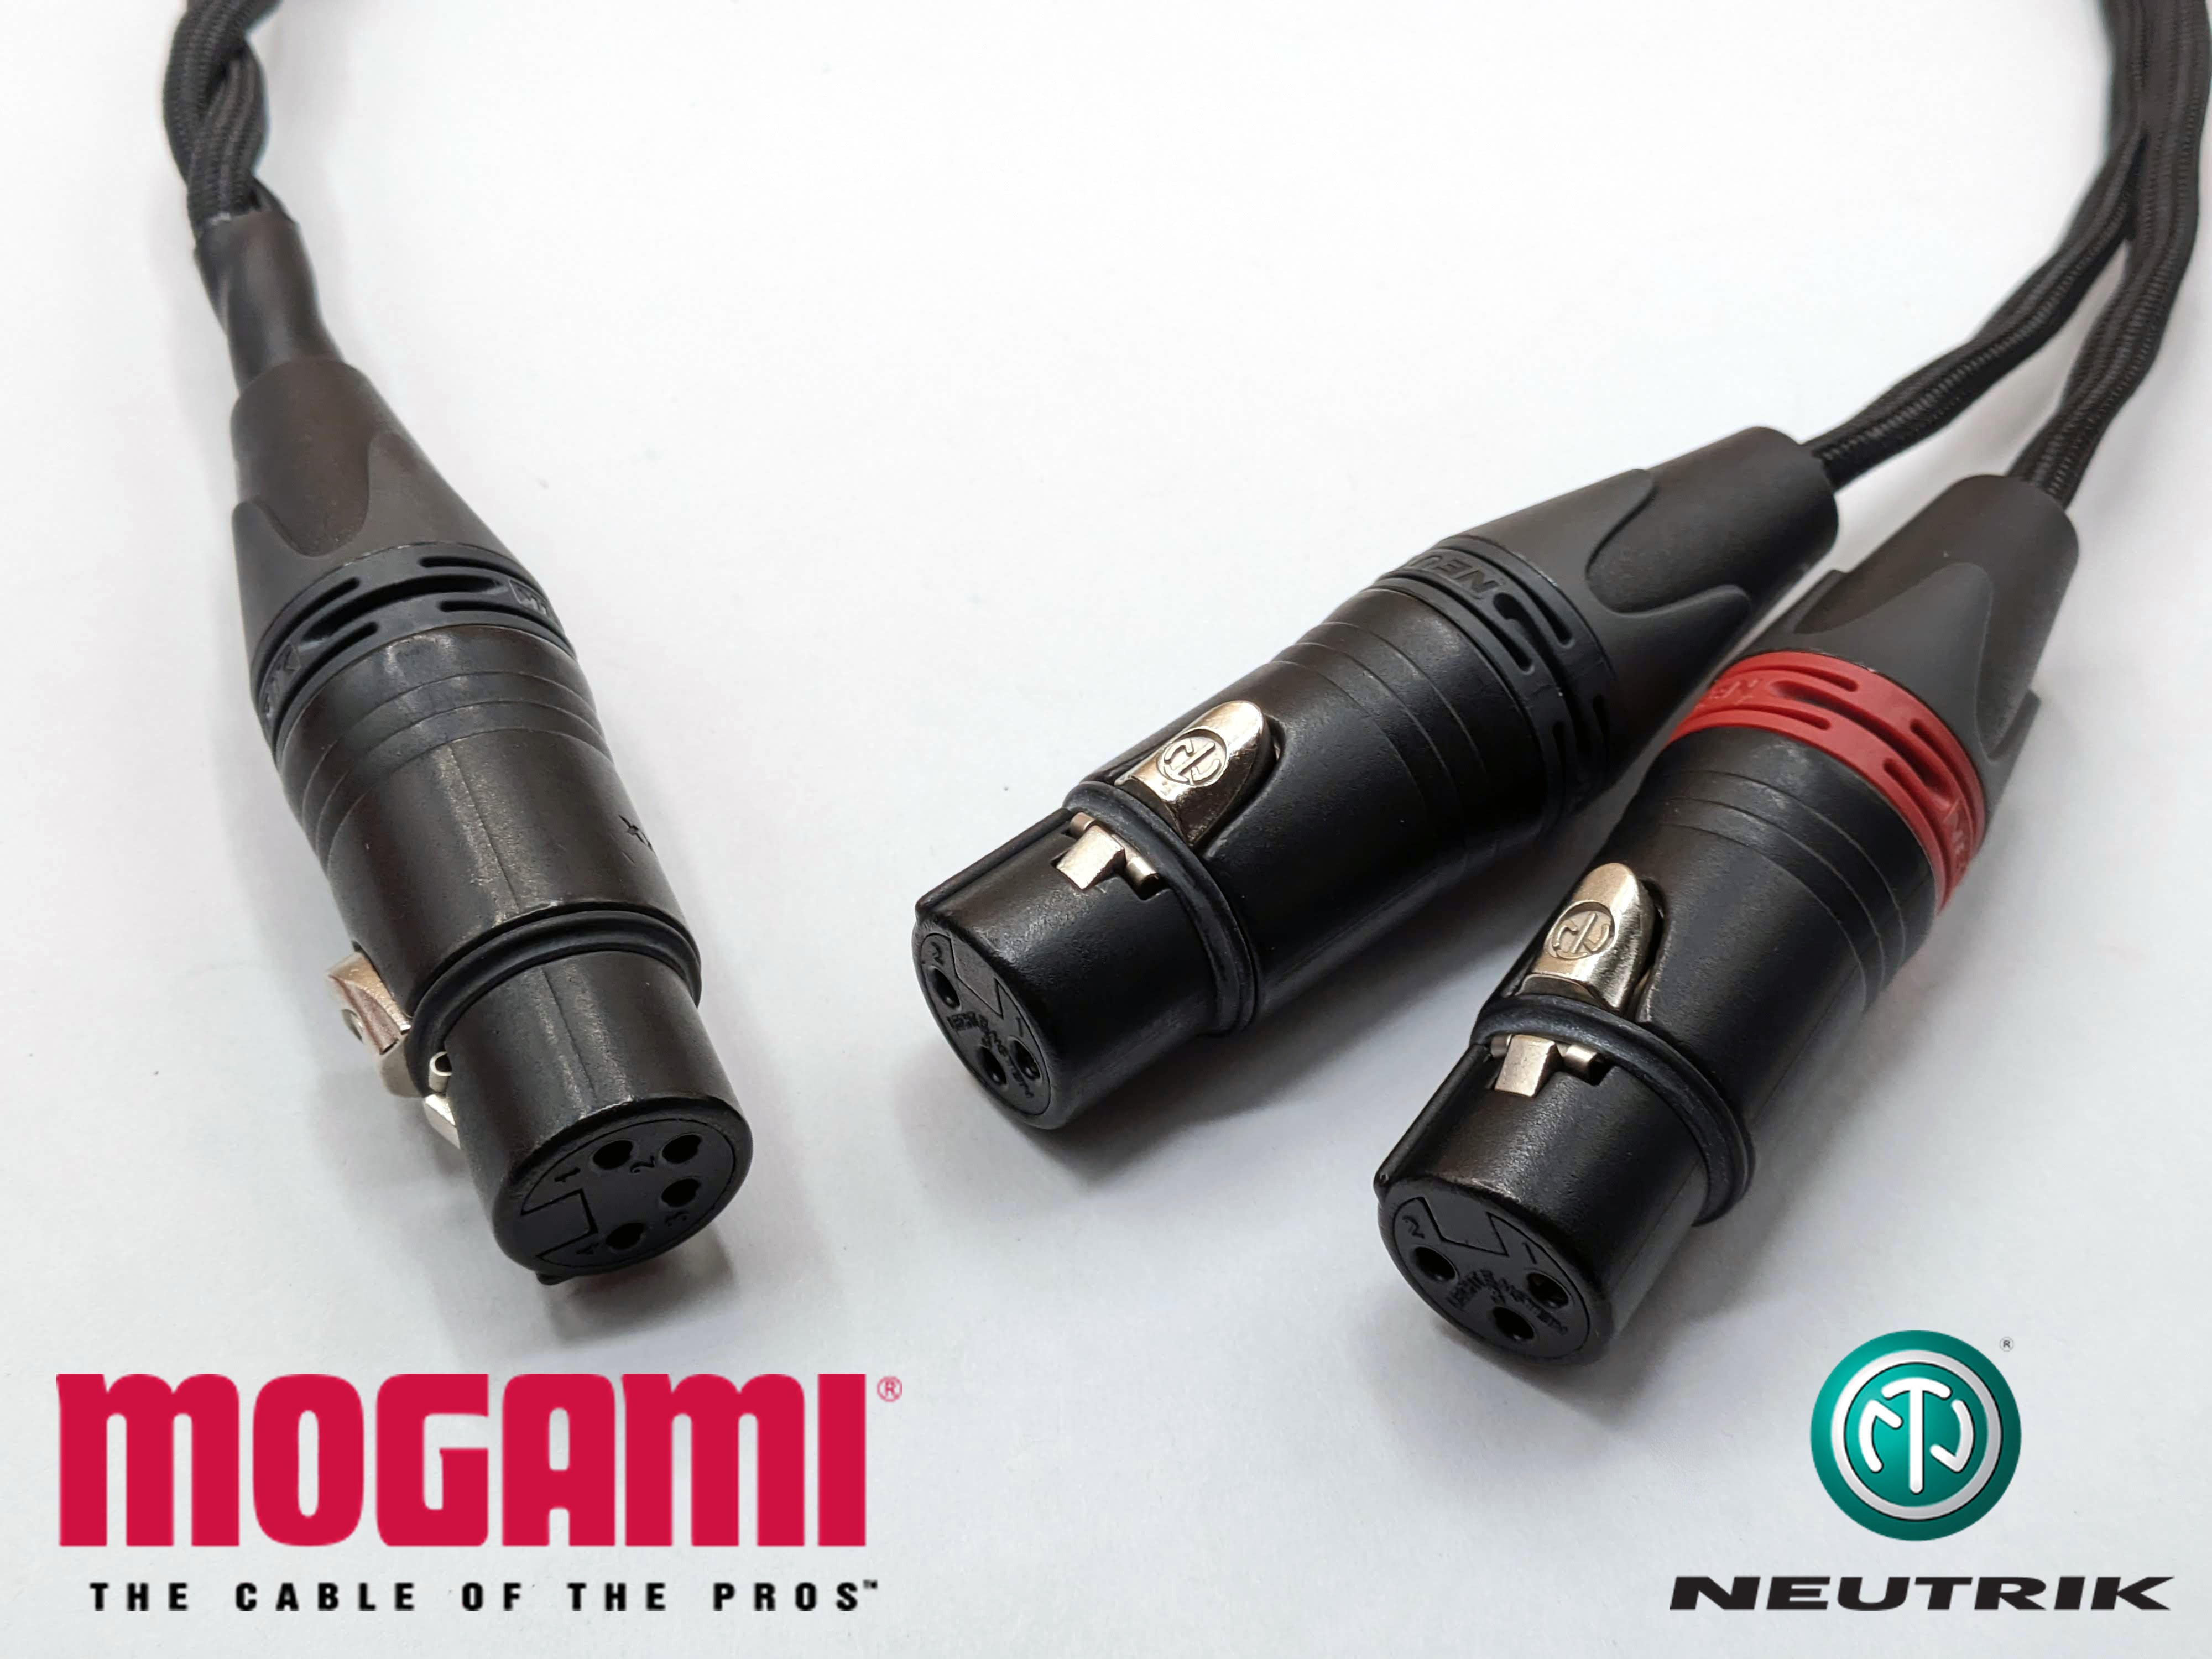 Adaptor Cable - Female 4 Pin XLR to Dual Female 3 Pin XLR - Mogami 22AWG